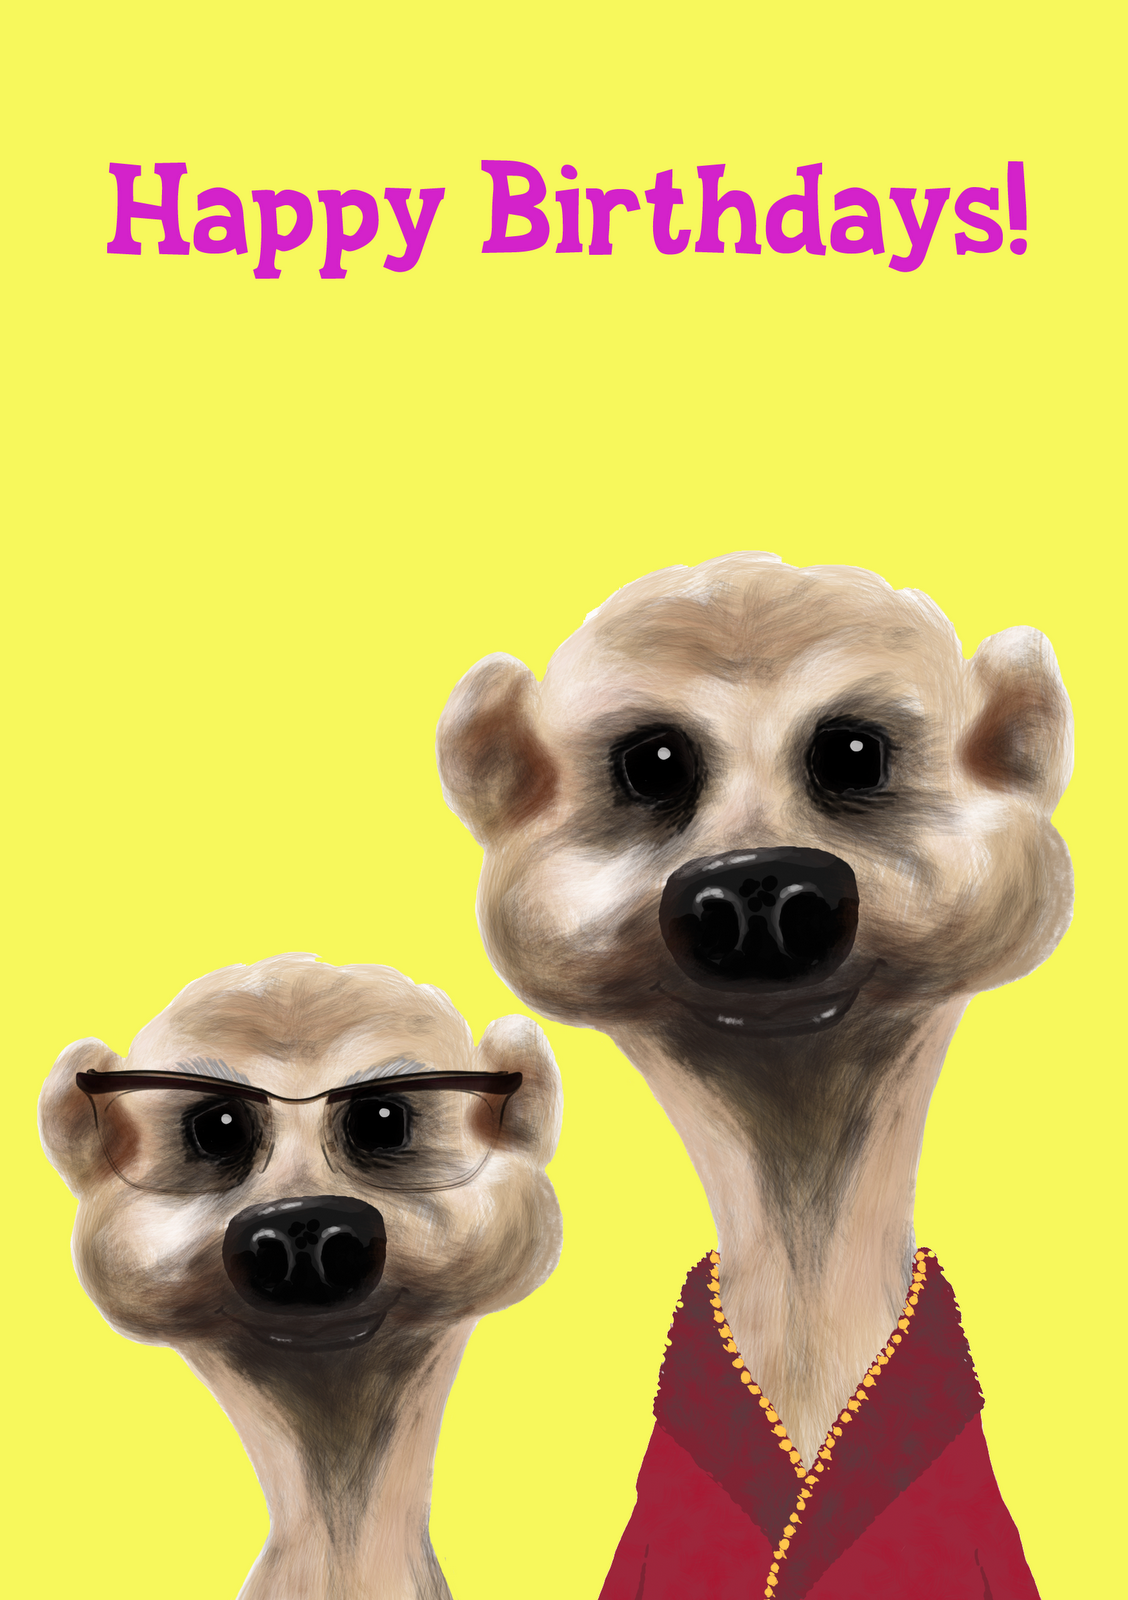 Happy Birthday Meerkat!